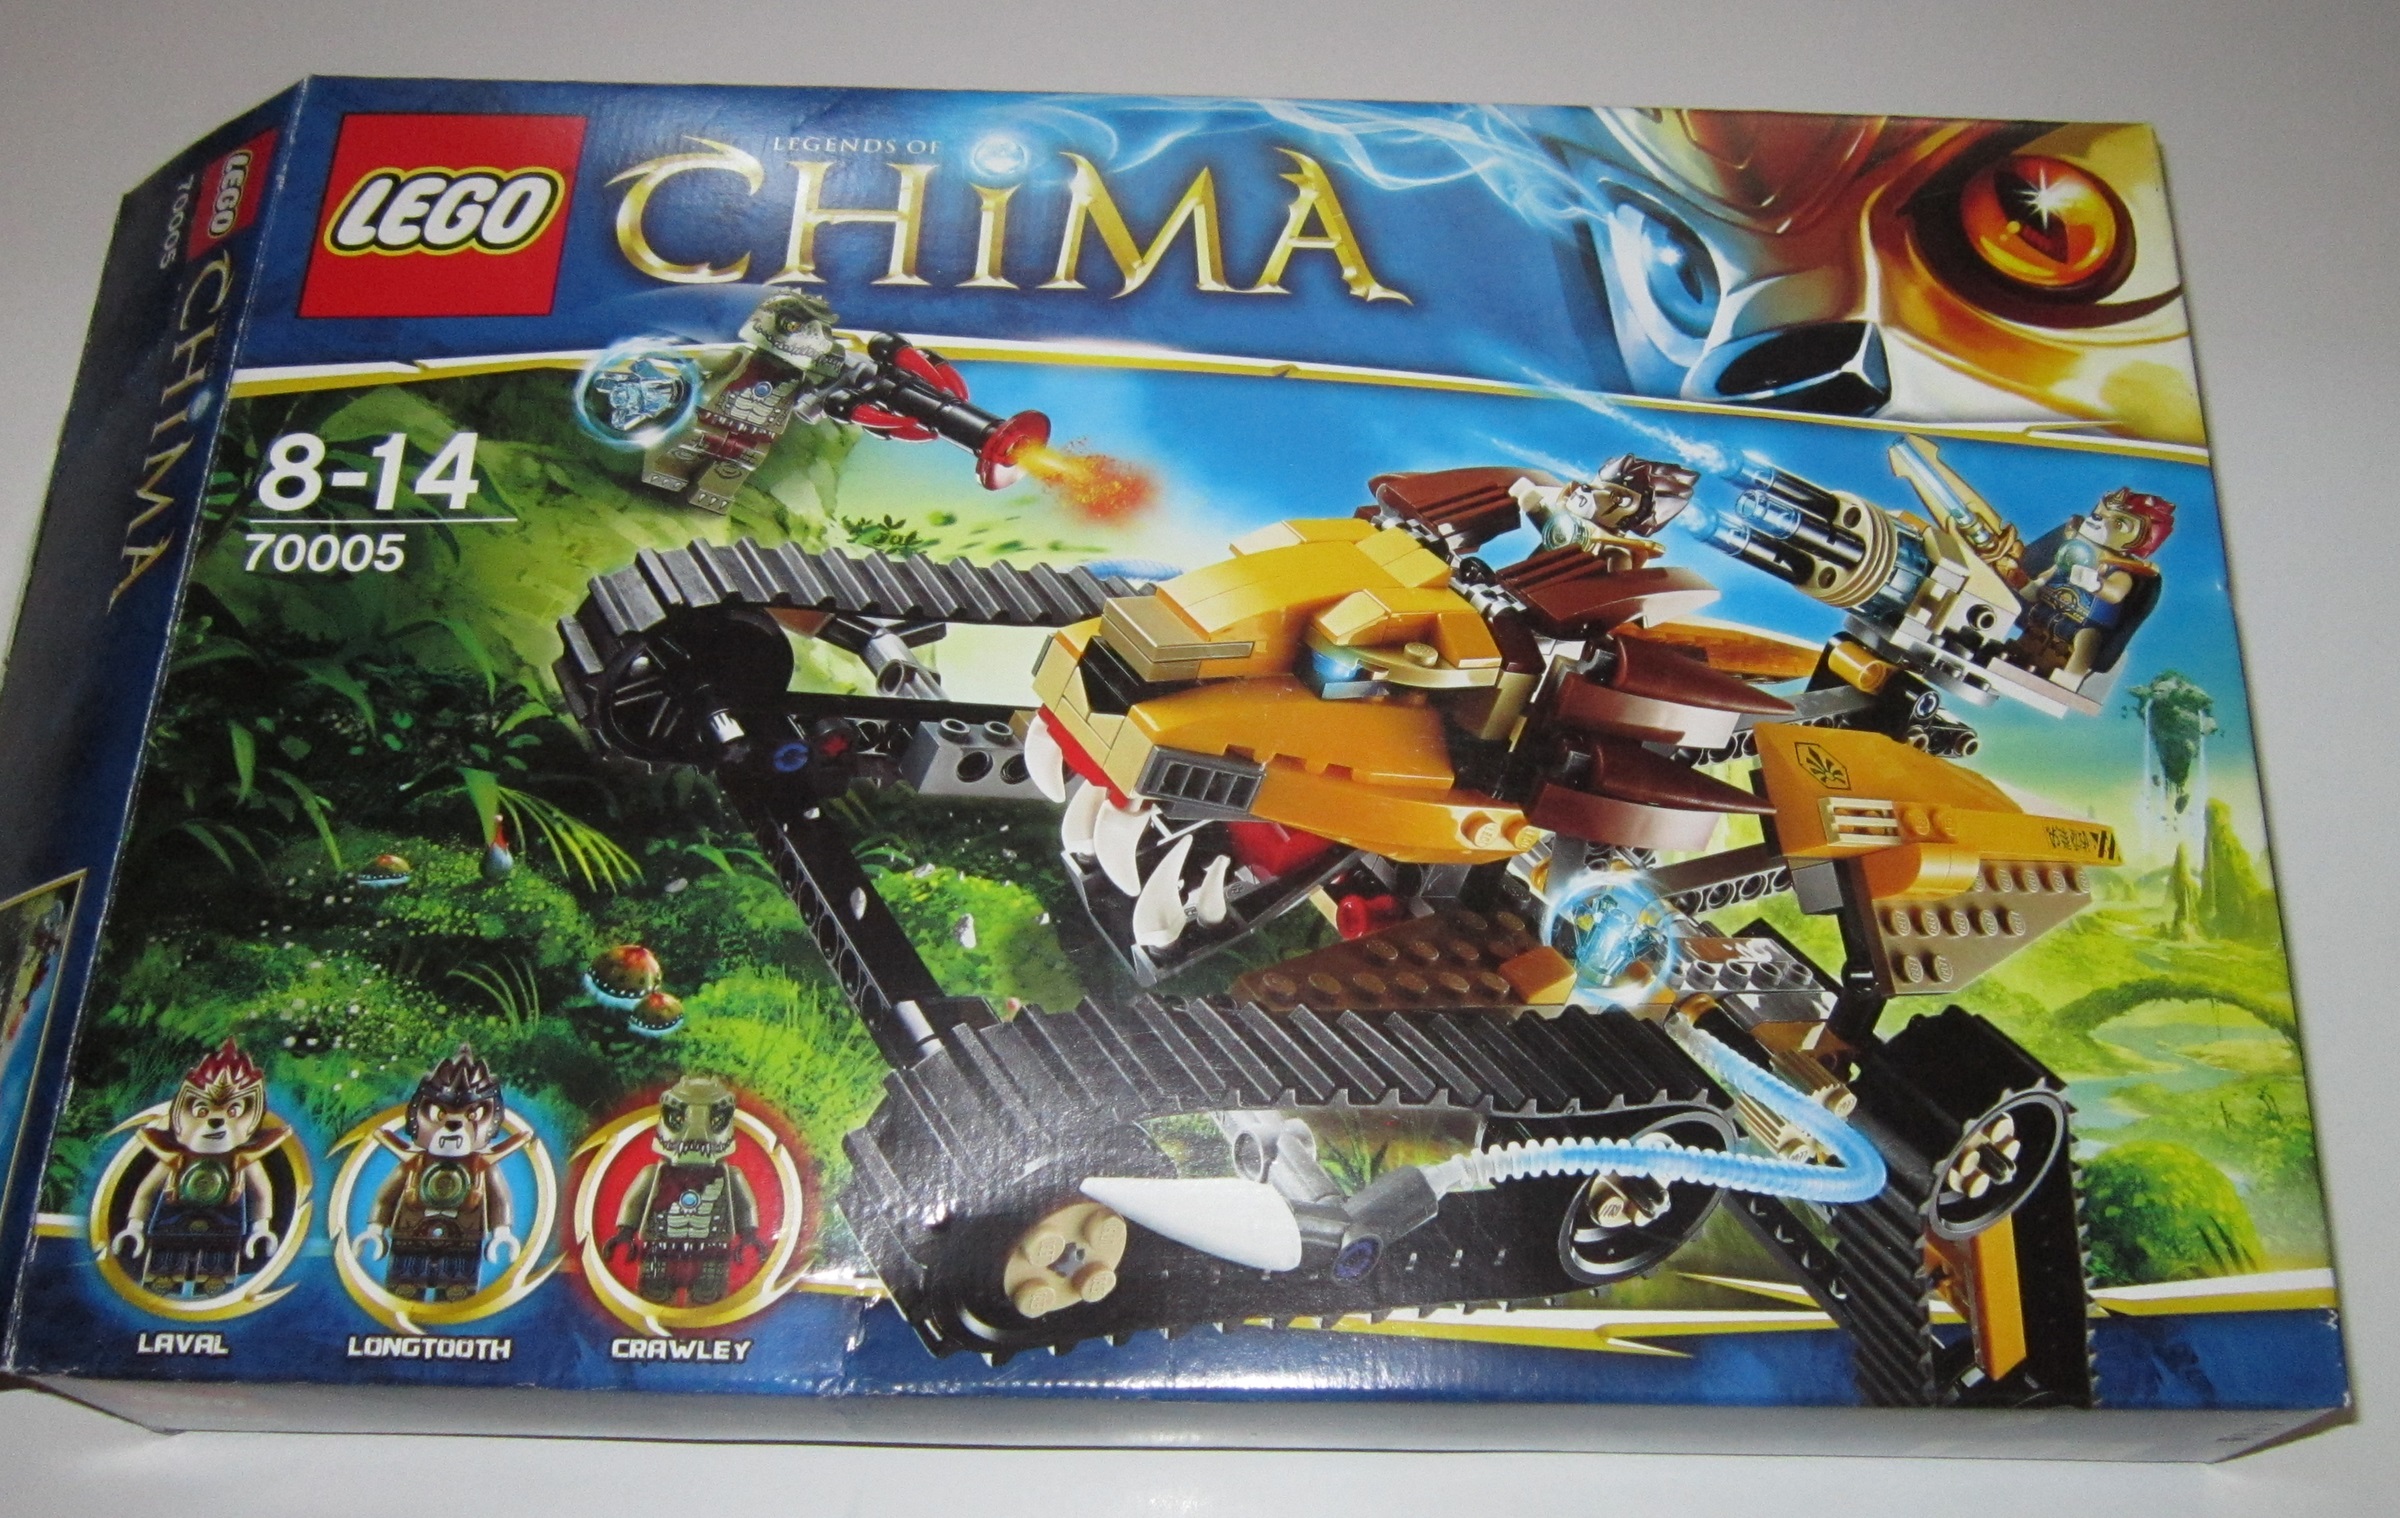 0600 Lego Chima 70005